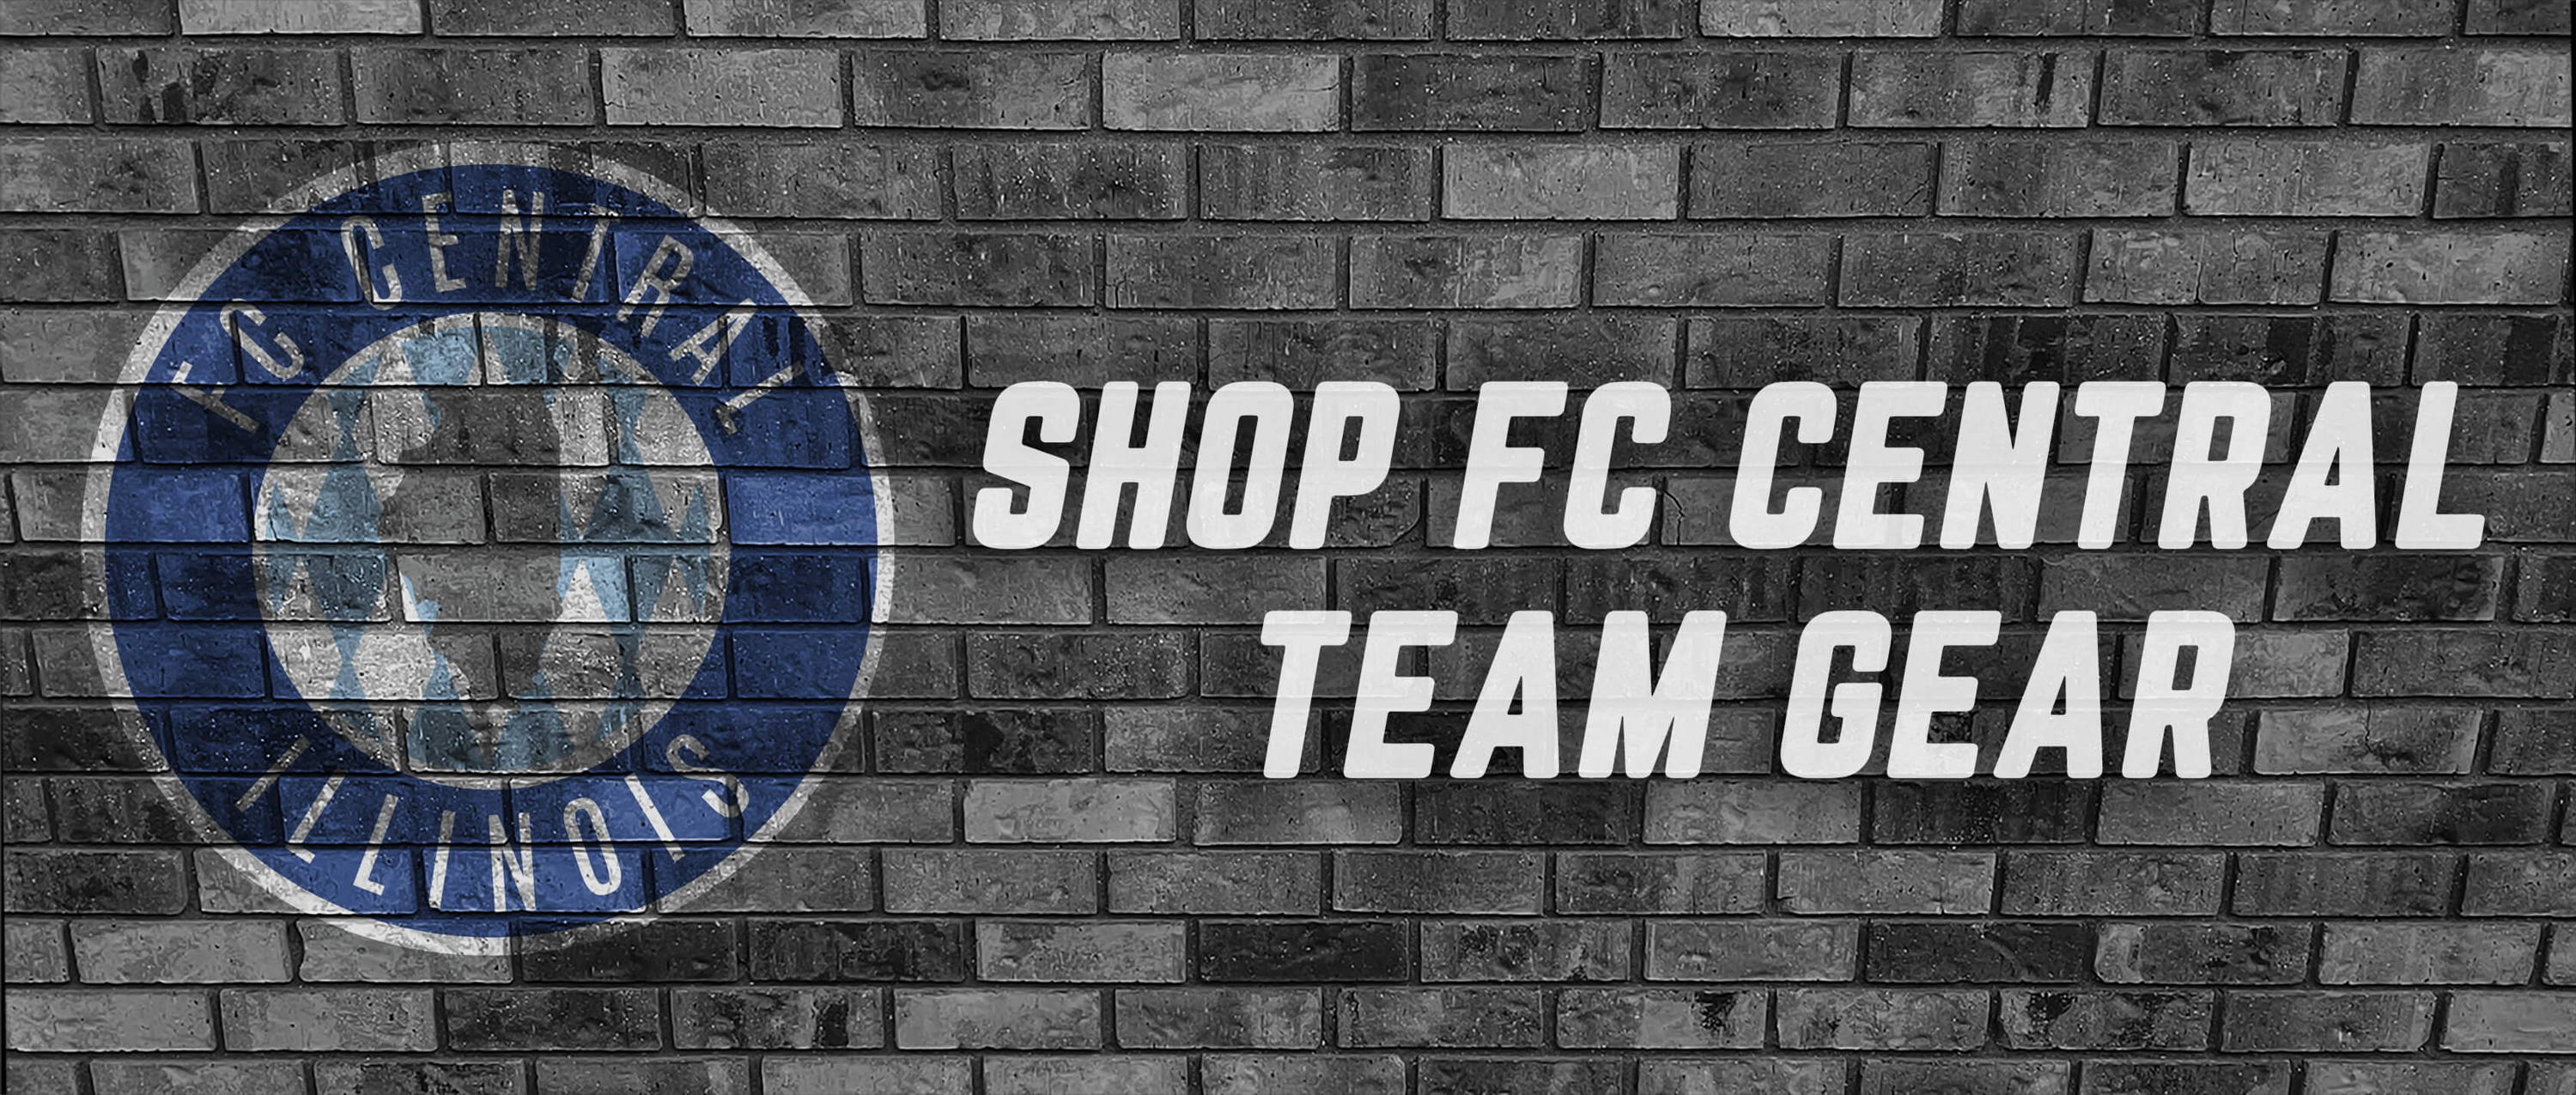 FC Central Illinois Soccer Club team merch store open